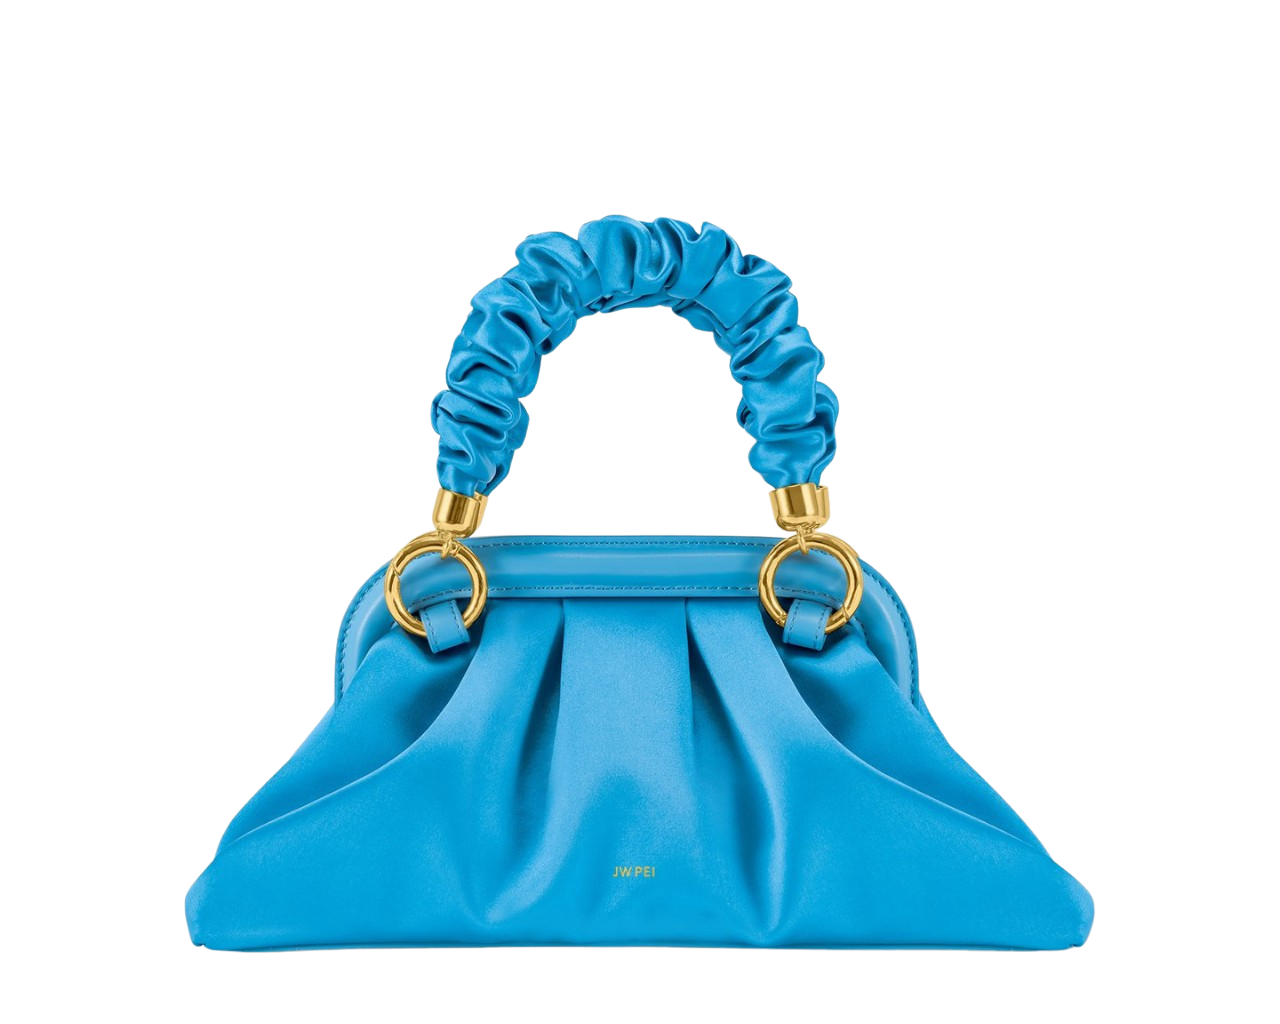 EmRata Owns Not One But Two of the Same Stylish Handbag - Grazia